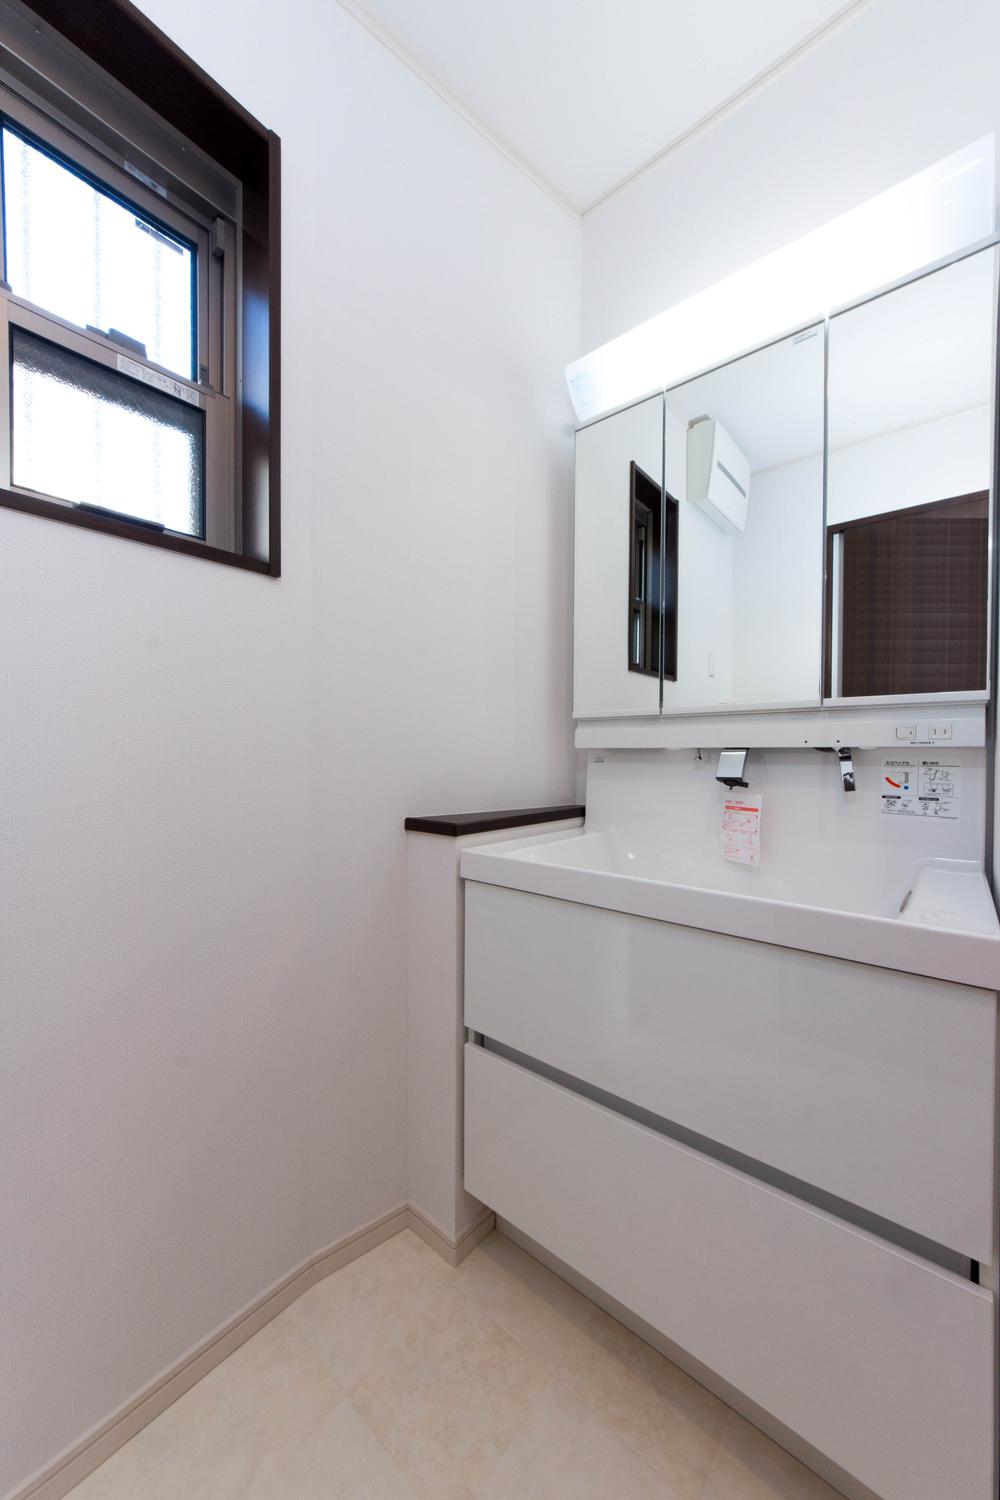 Wash basin, toilet. Vanity integrally molded counter